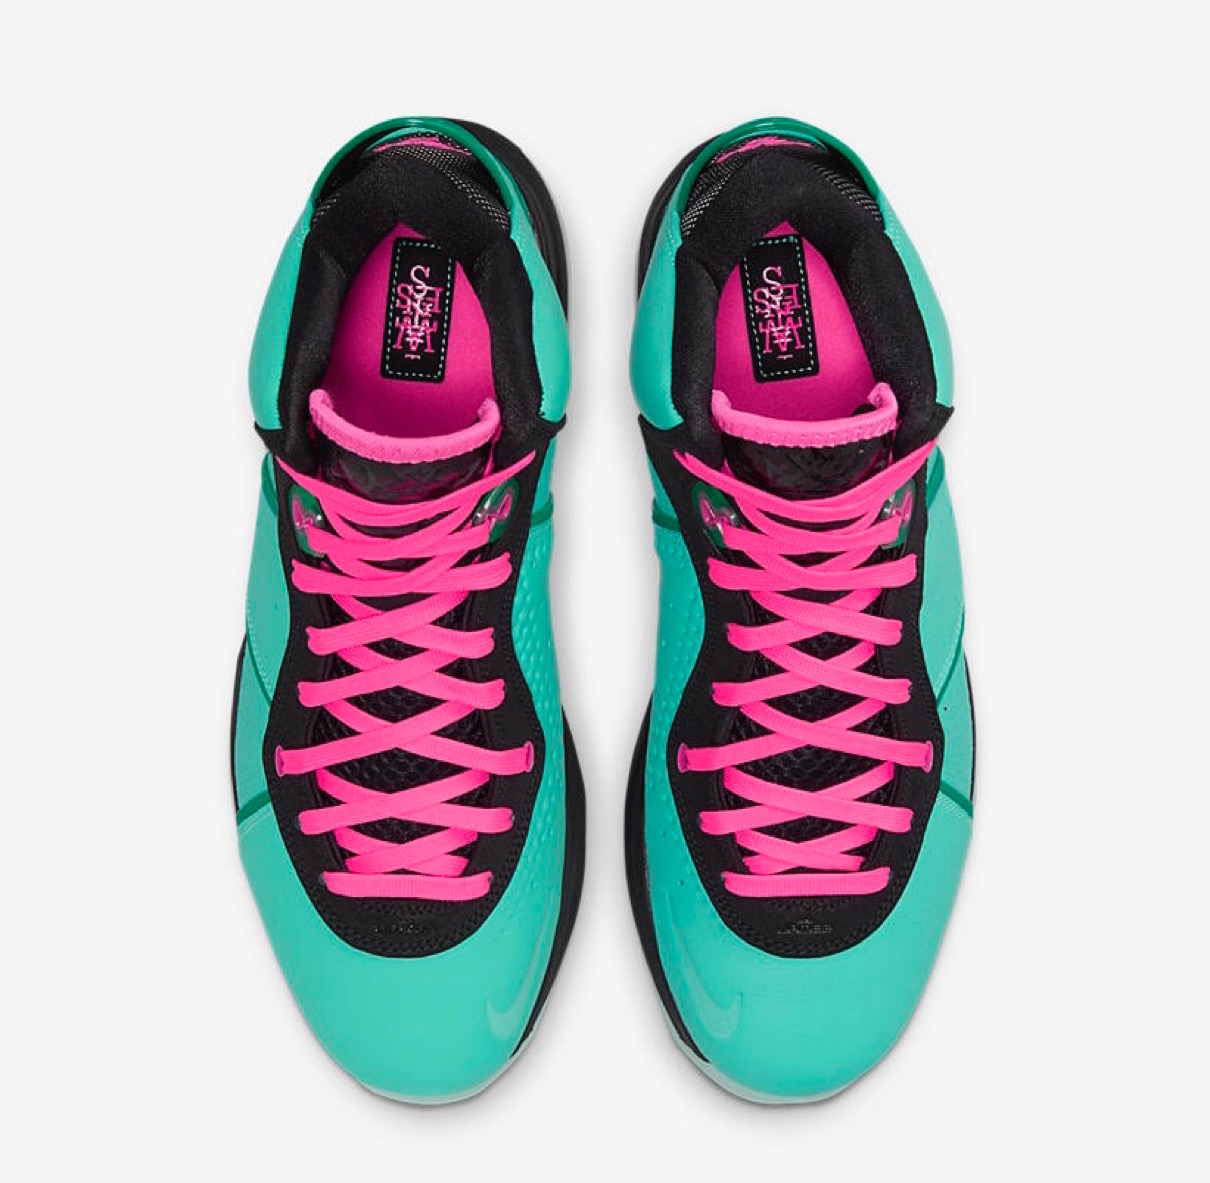 Nike】LeBron 8 QS “South Beach”が海外2021年7月10日に復刻発売予定